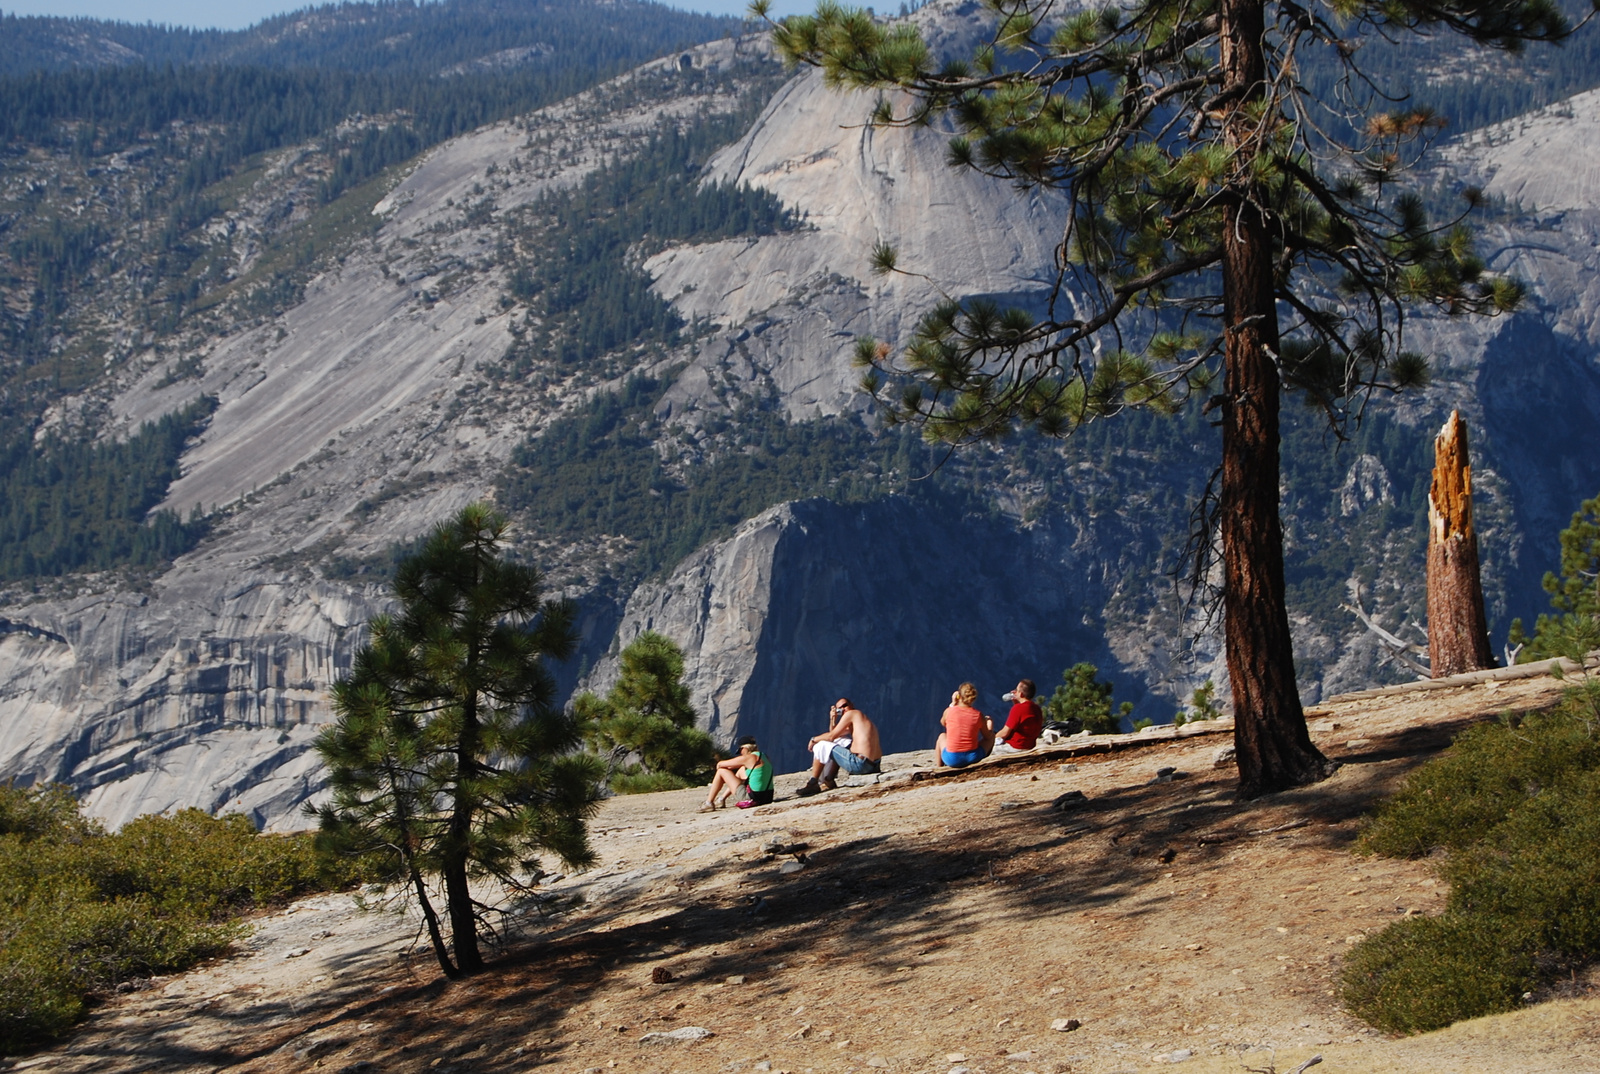 US12 0926 035 Yosemite NP, CA